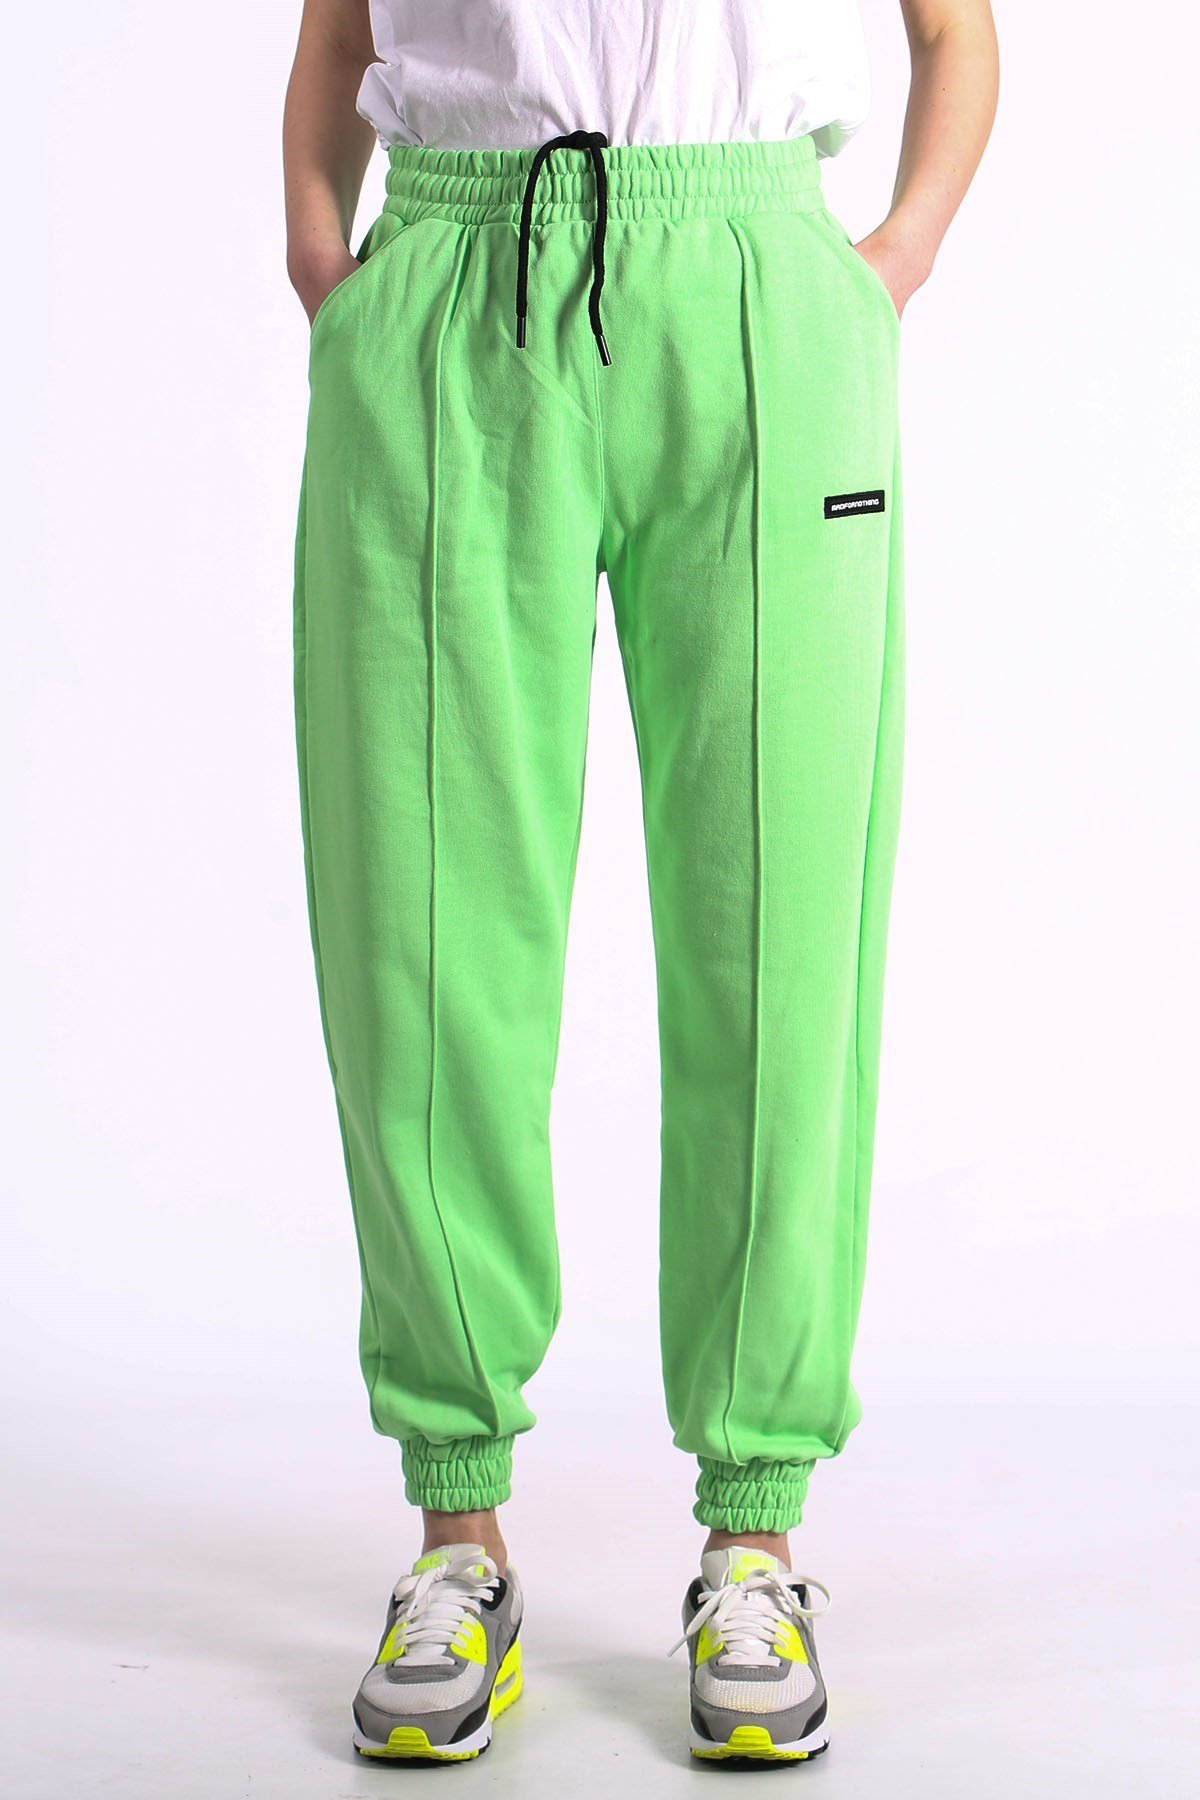  Green Maze and Street Lights Women's Sweatpant Pants